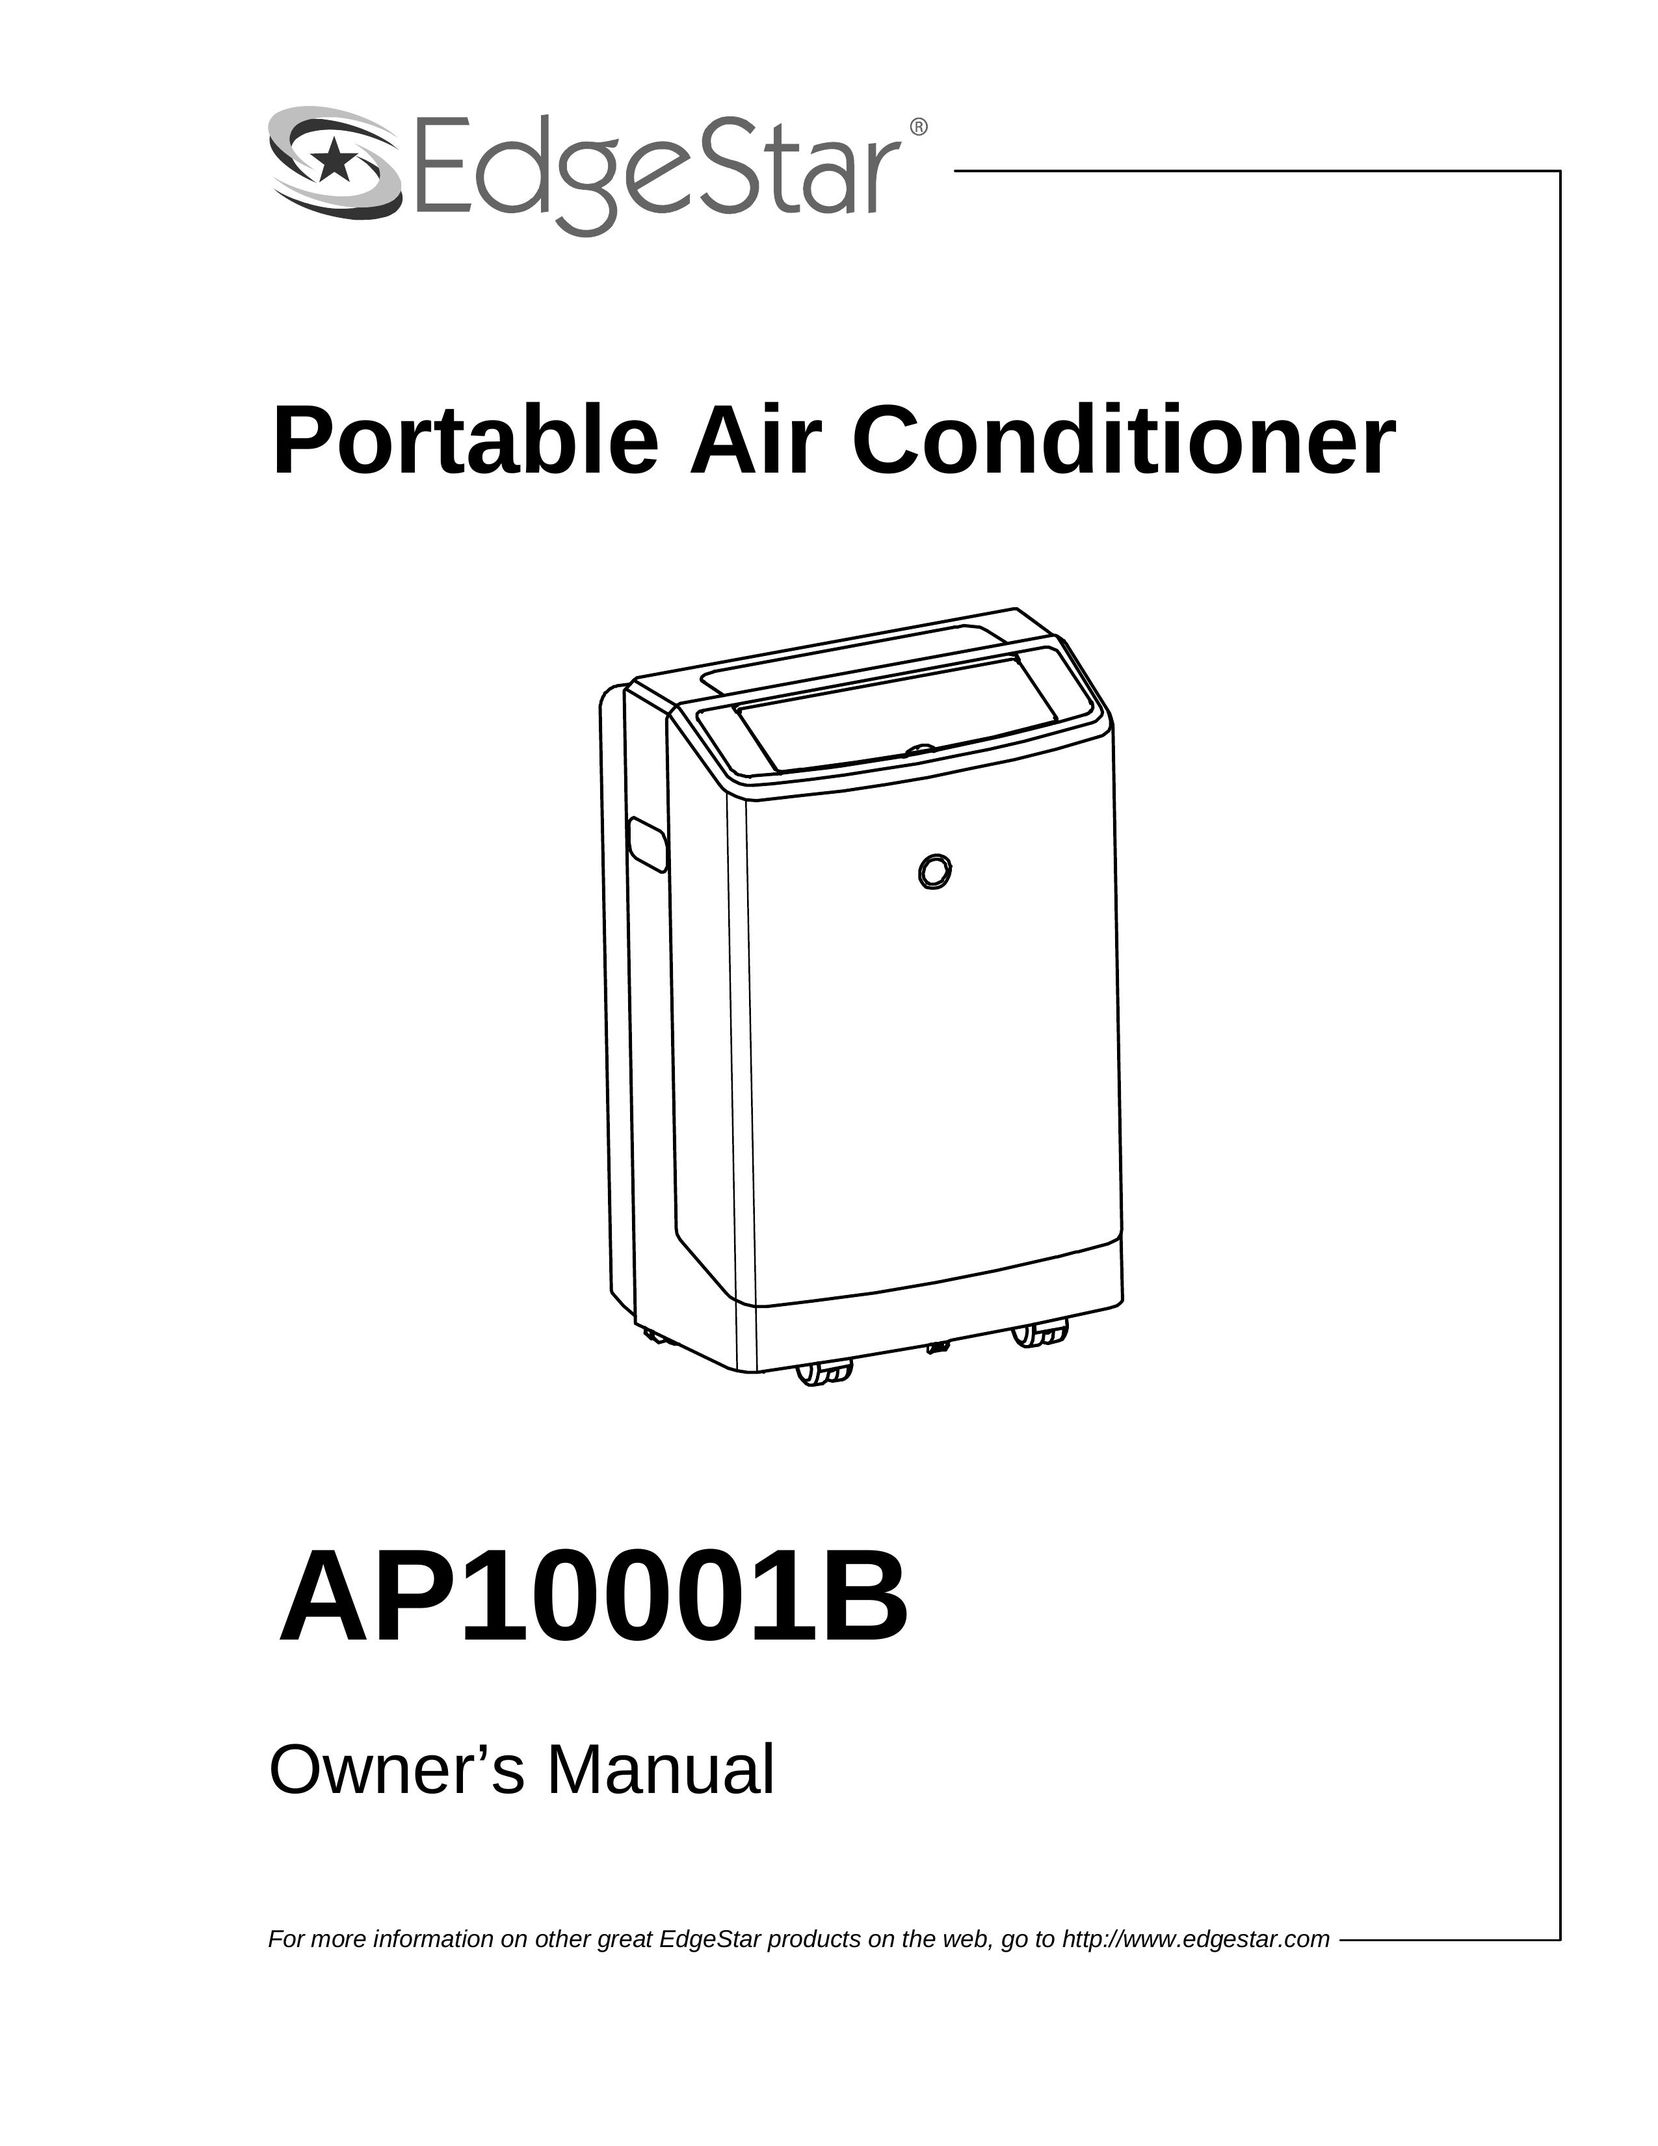 EdgeStar AP10001B Air Conditioner User Manual